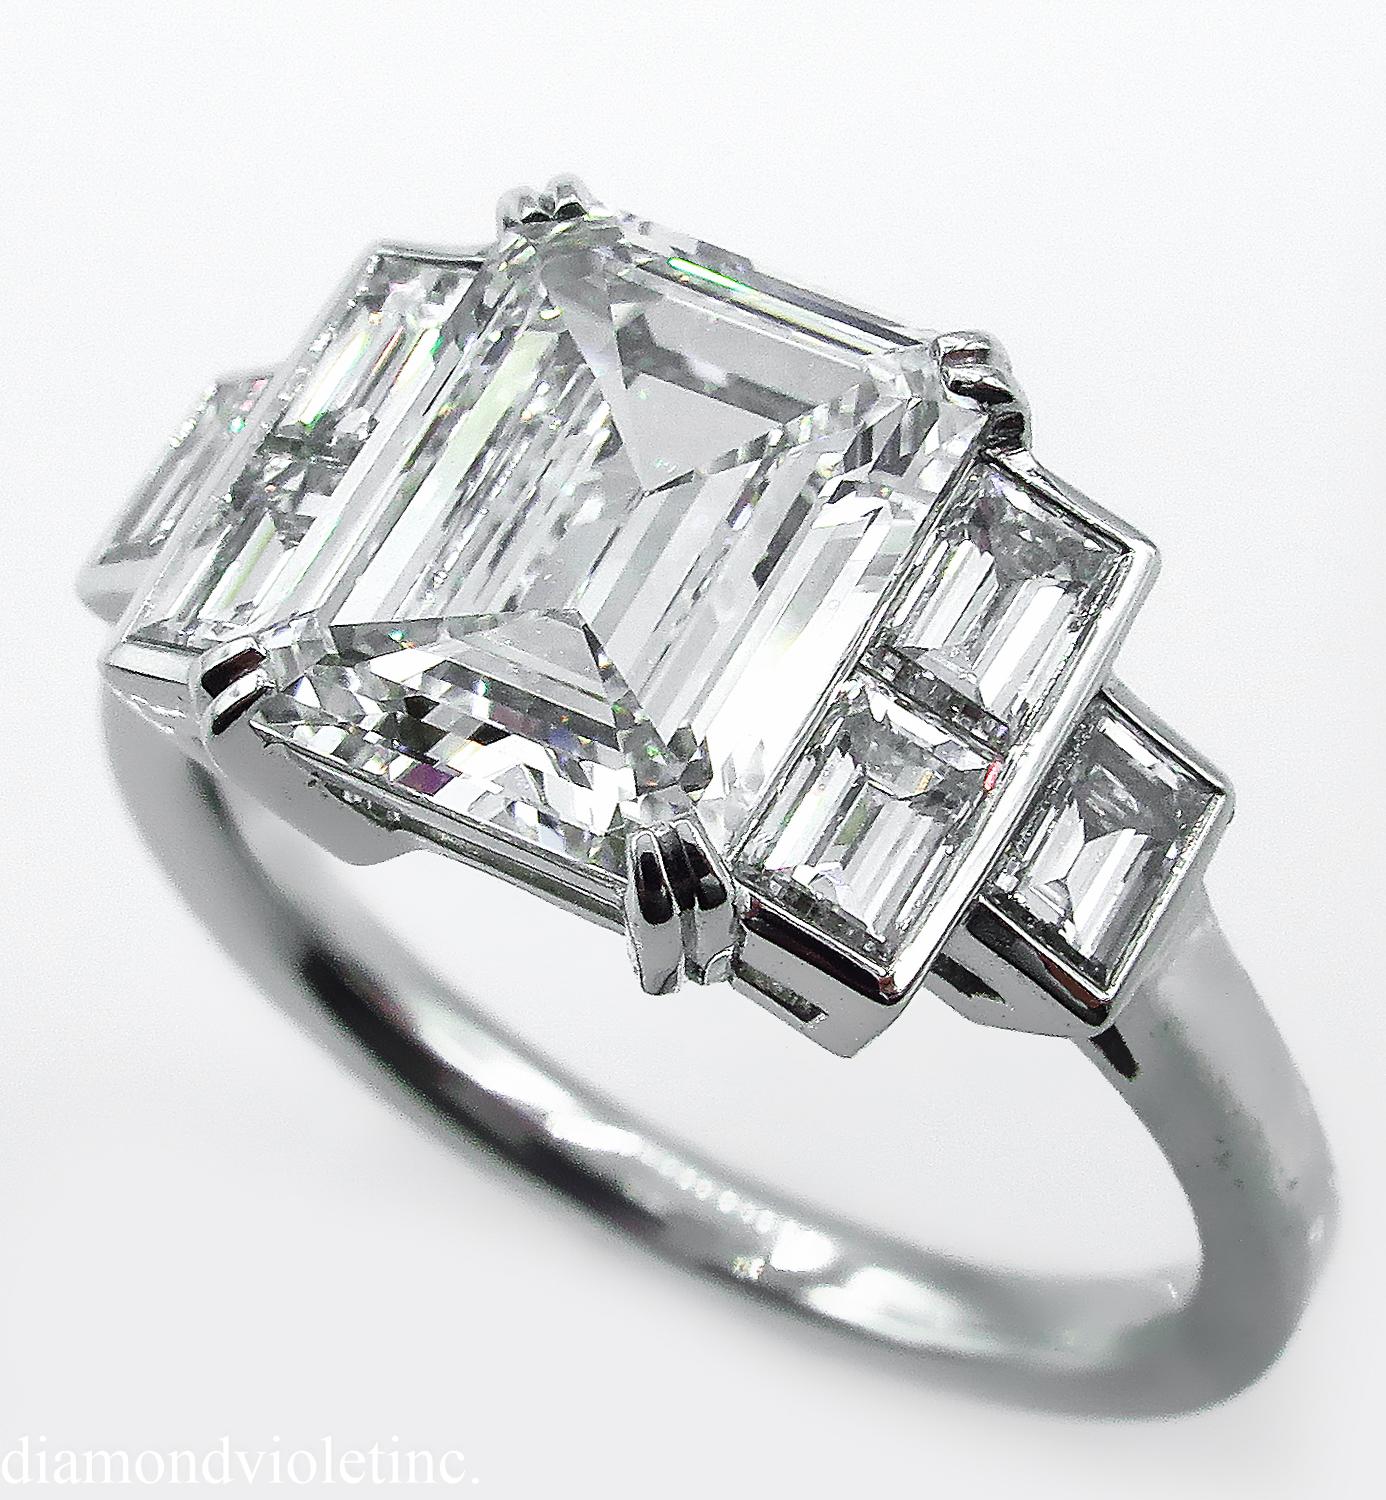 Emerald Cut GIA 3.09 Carat Emerald cut Diamond Engagement Wedding Platinum Ring